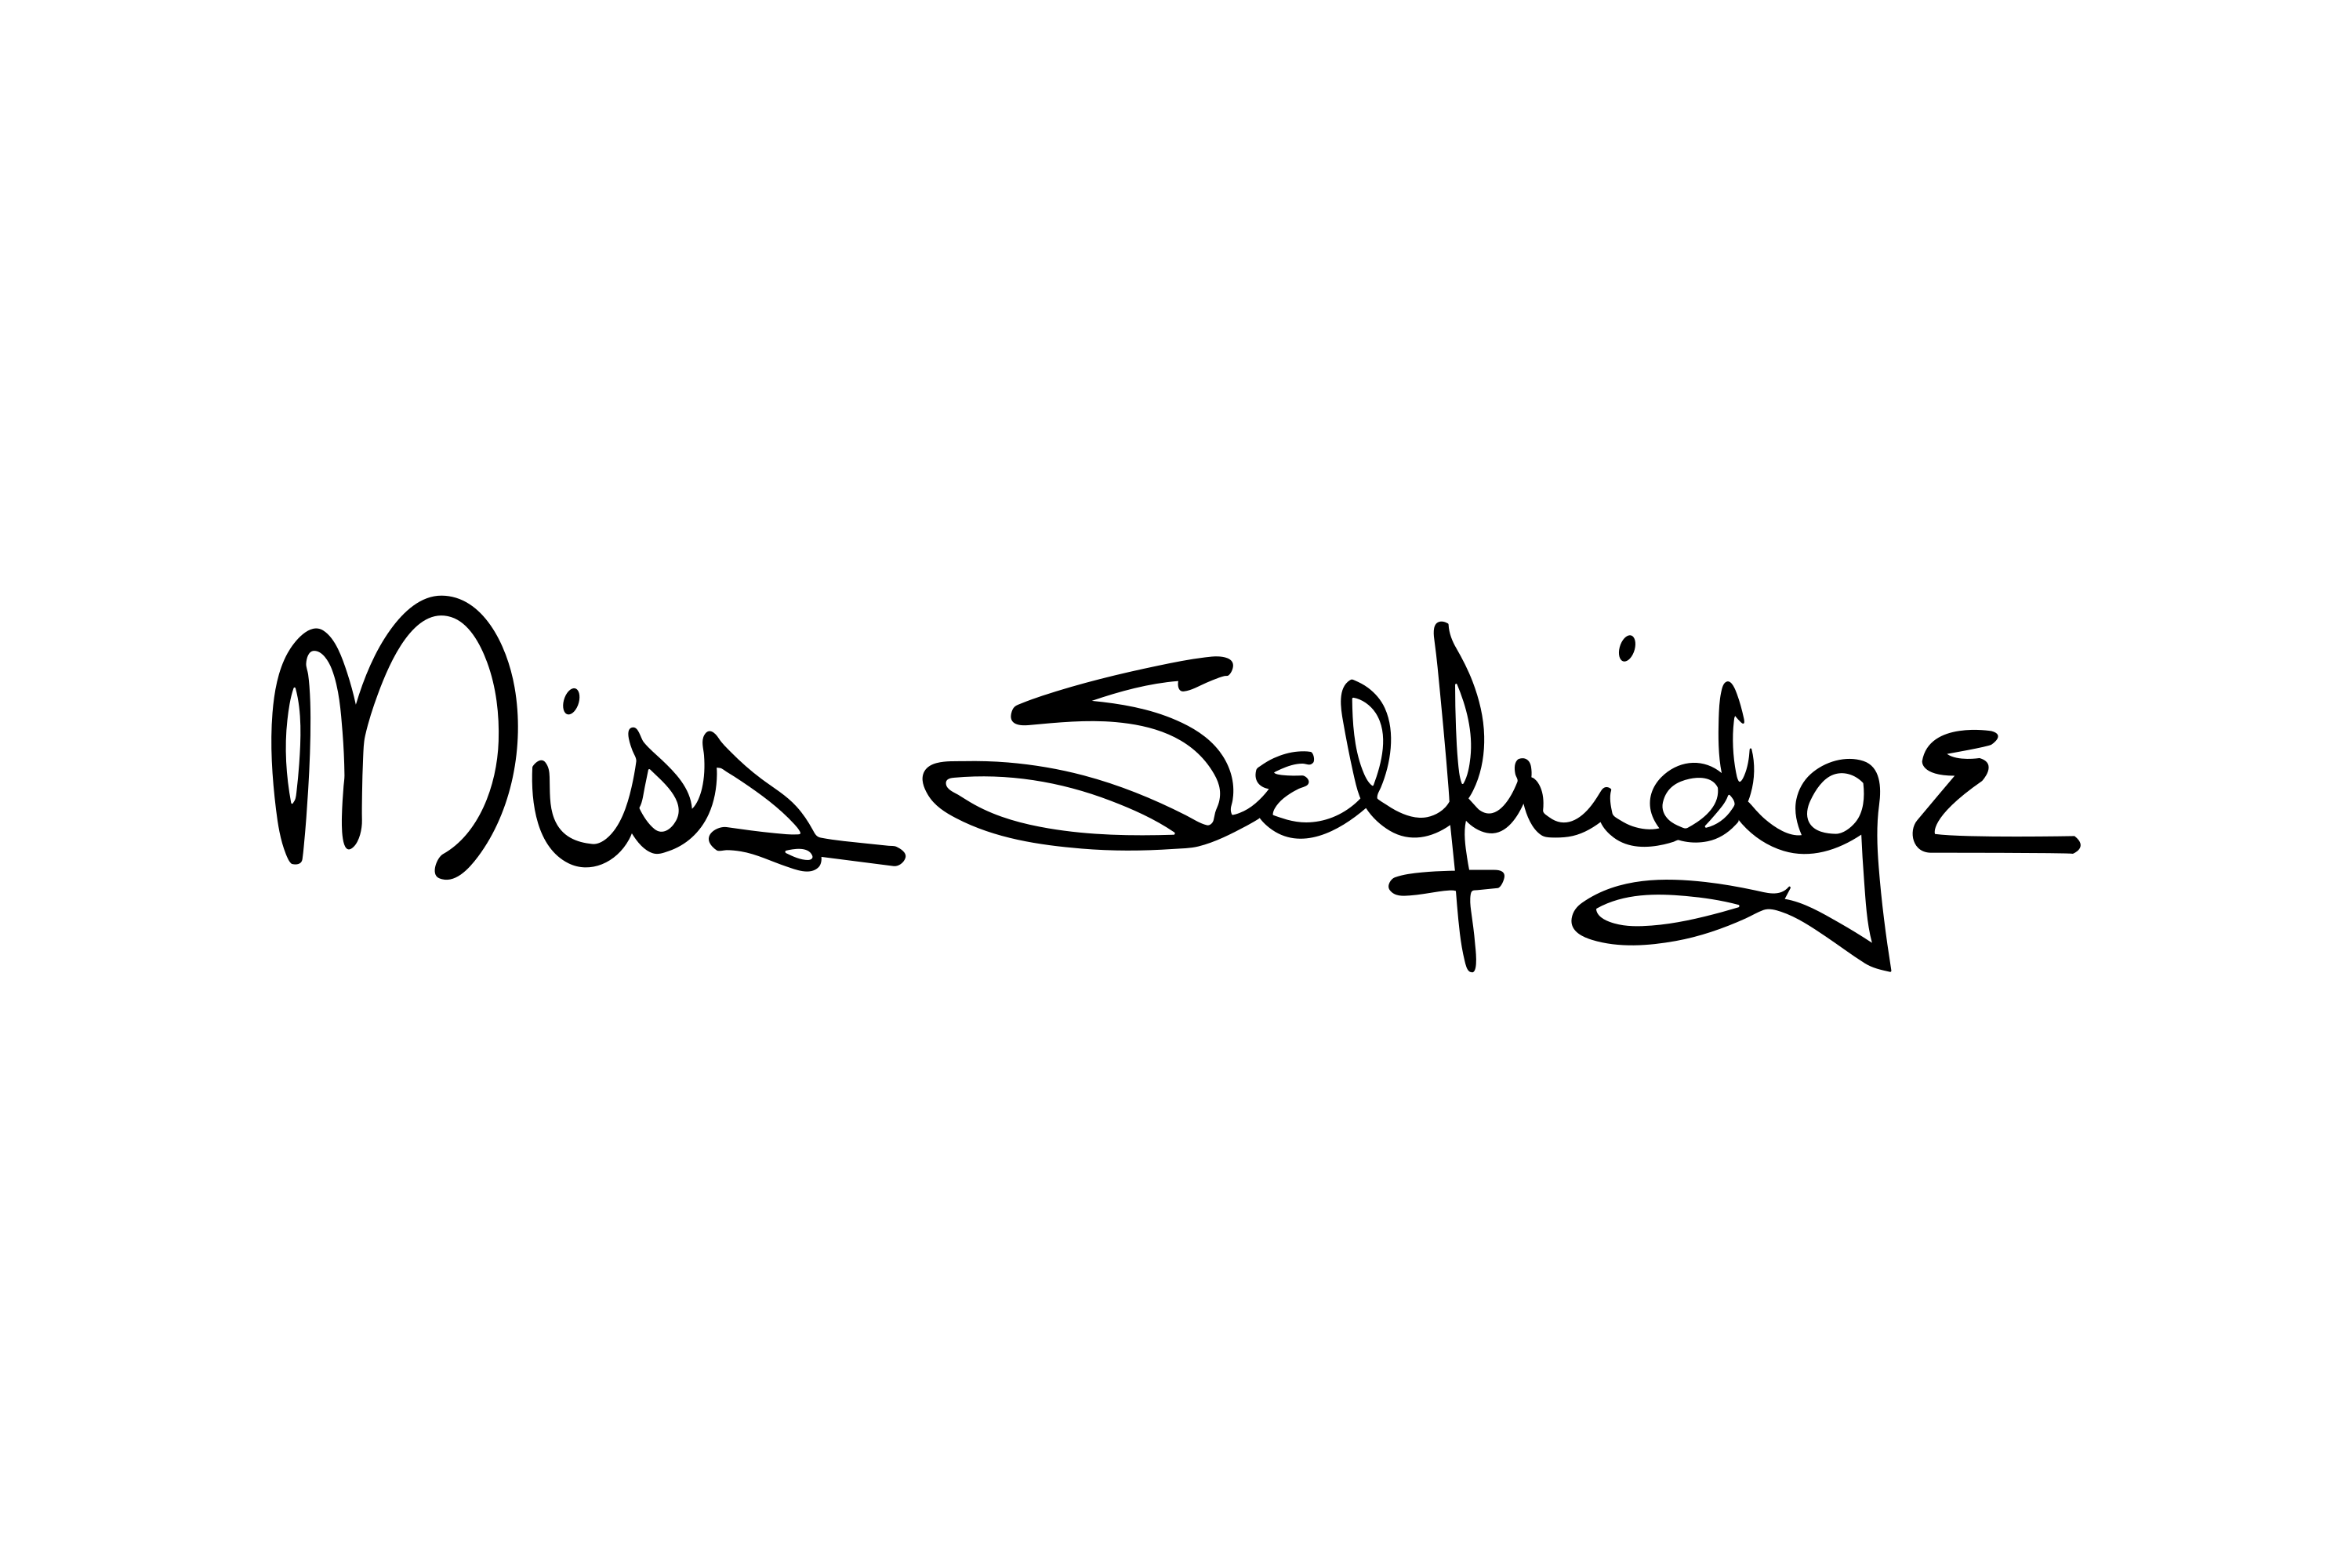 Download Miss Selfridge Logo in SVG Vector or PNG File Format 